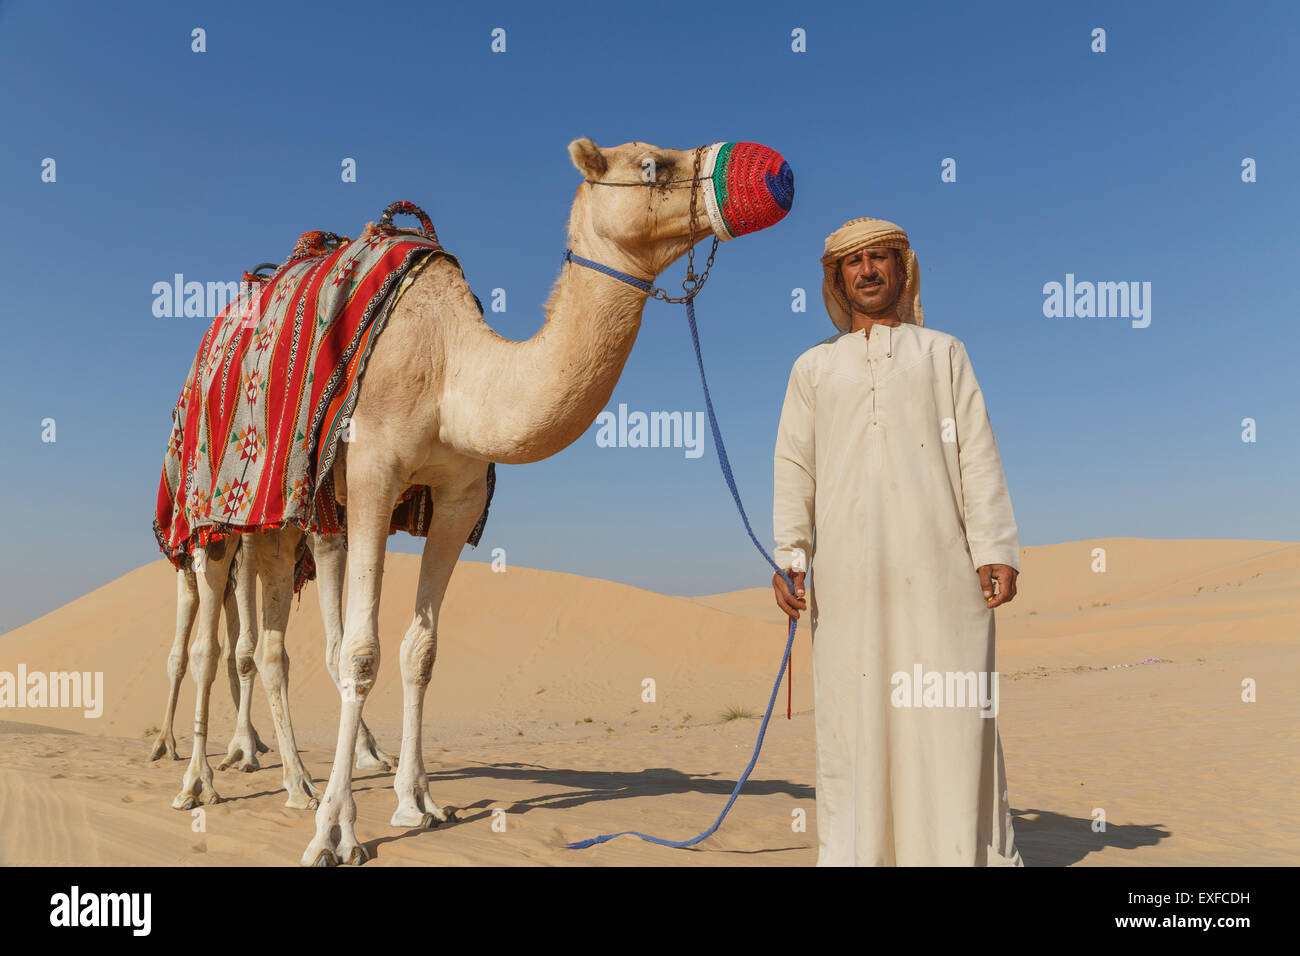 Portrait of bedouin with camel in desert, Dubai, United Arab Emirates Stock Photo